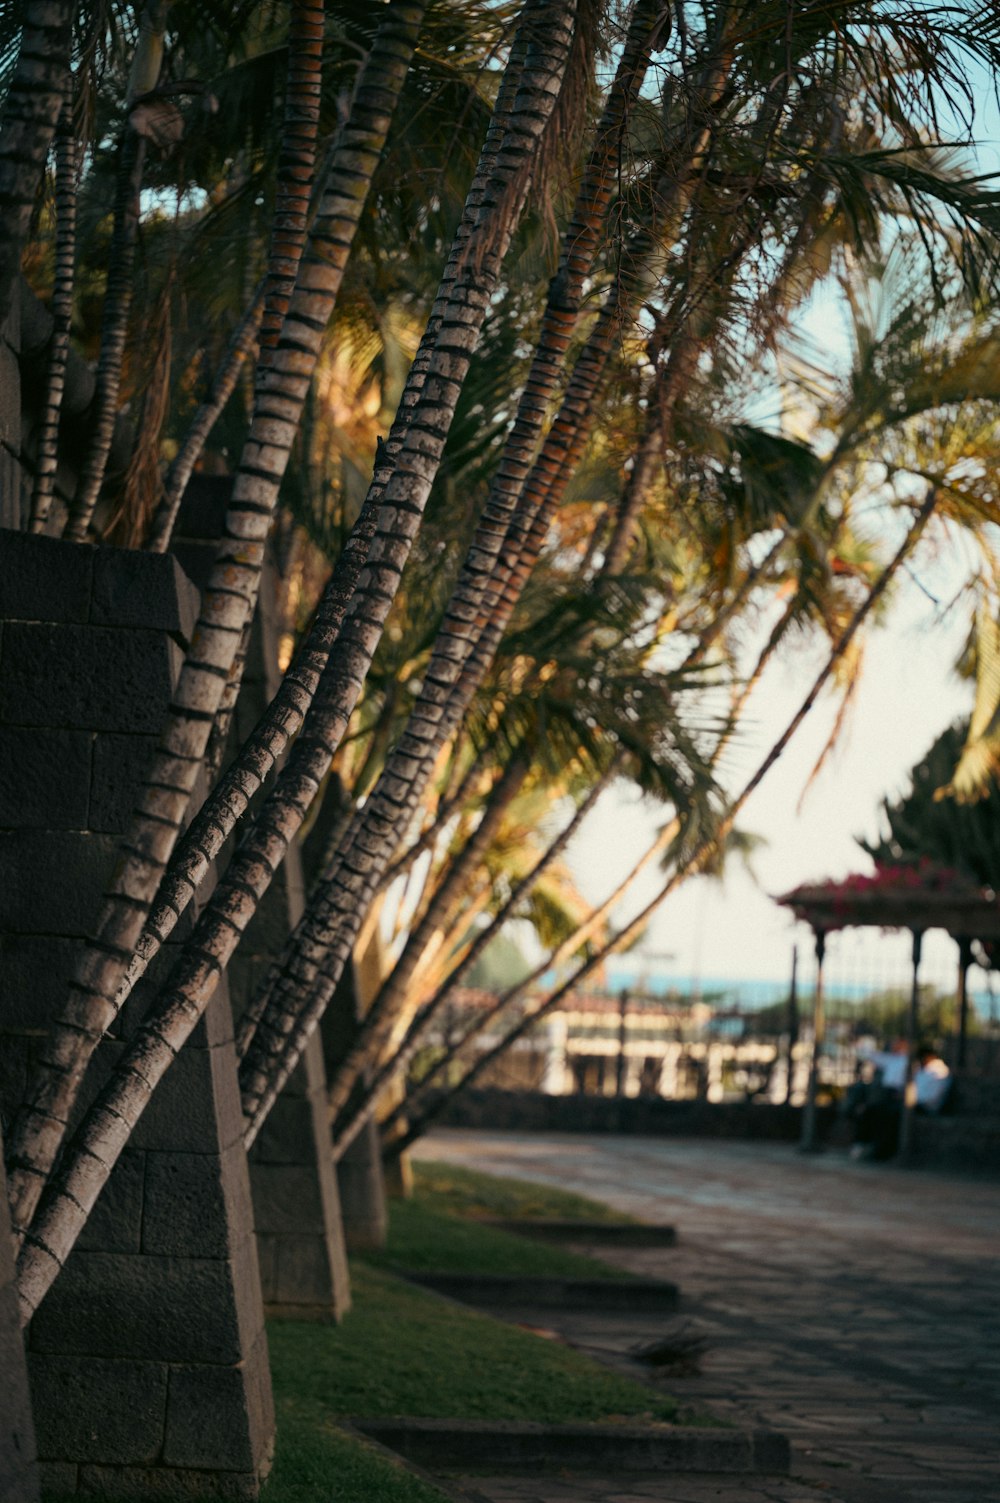 a man riding a skateboard down a sidewalk next to palm trees